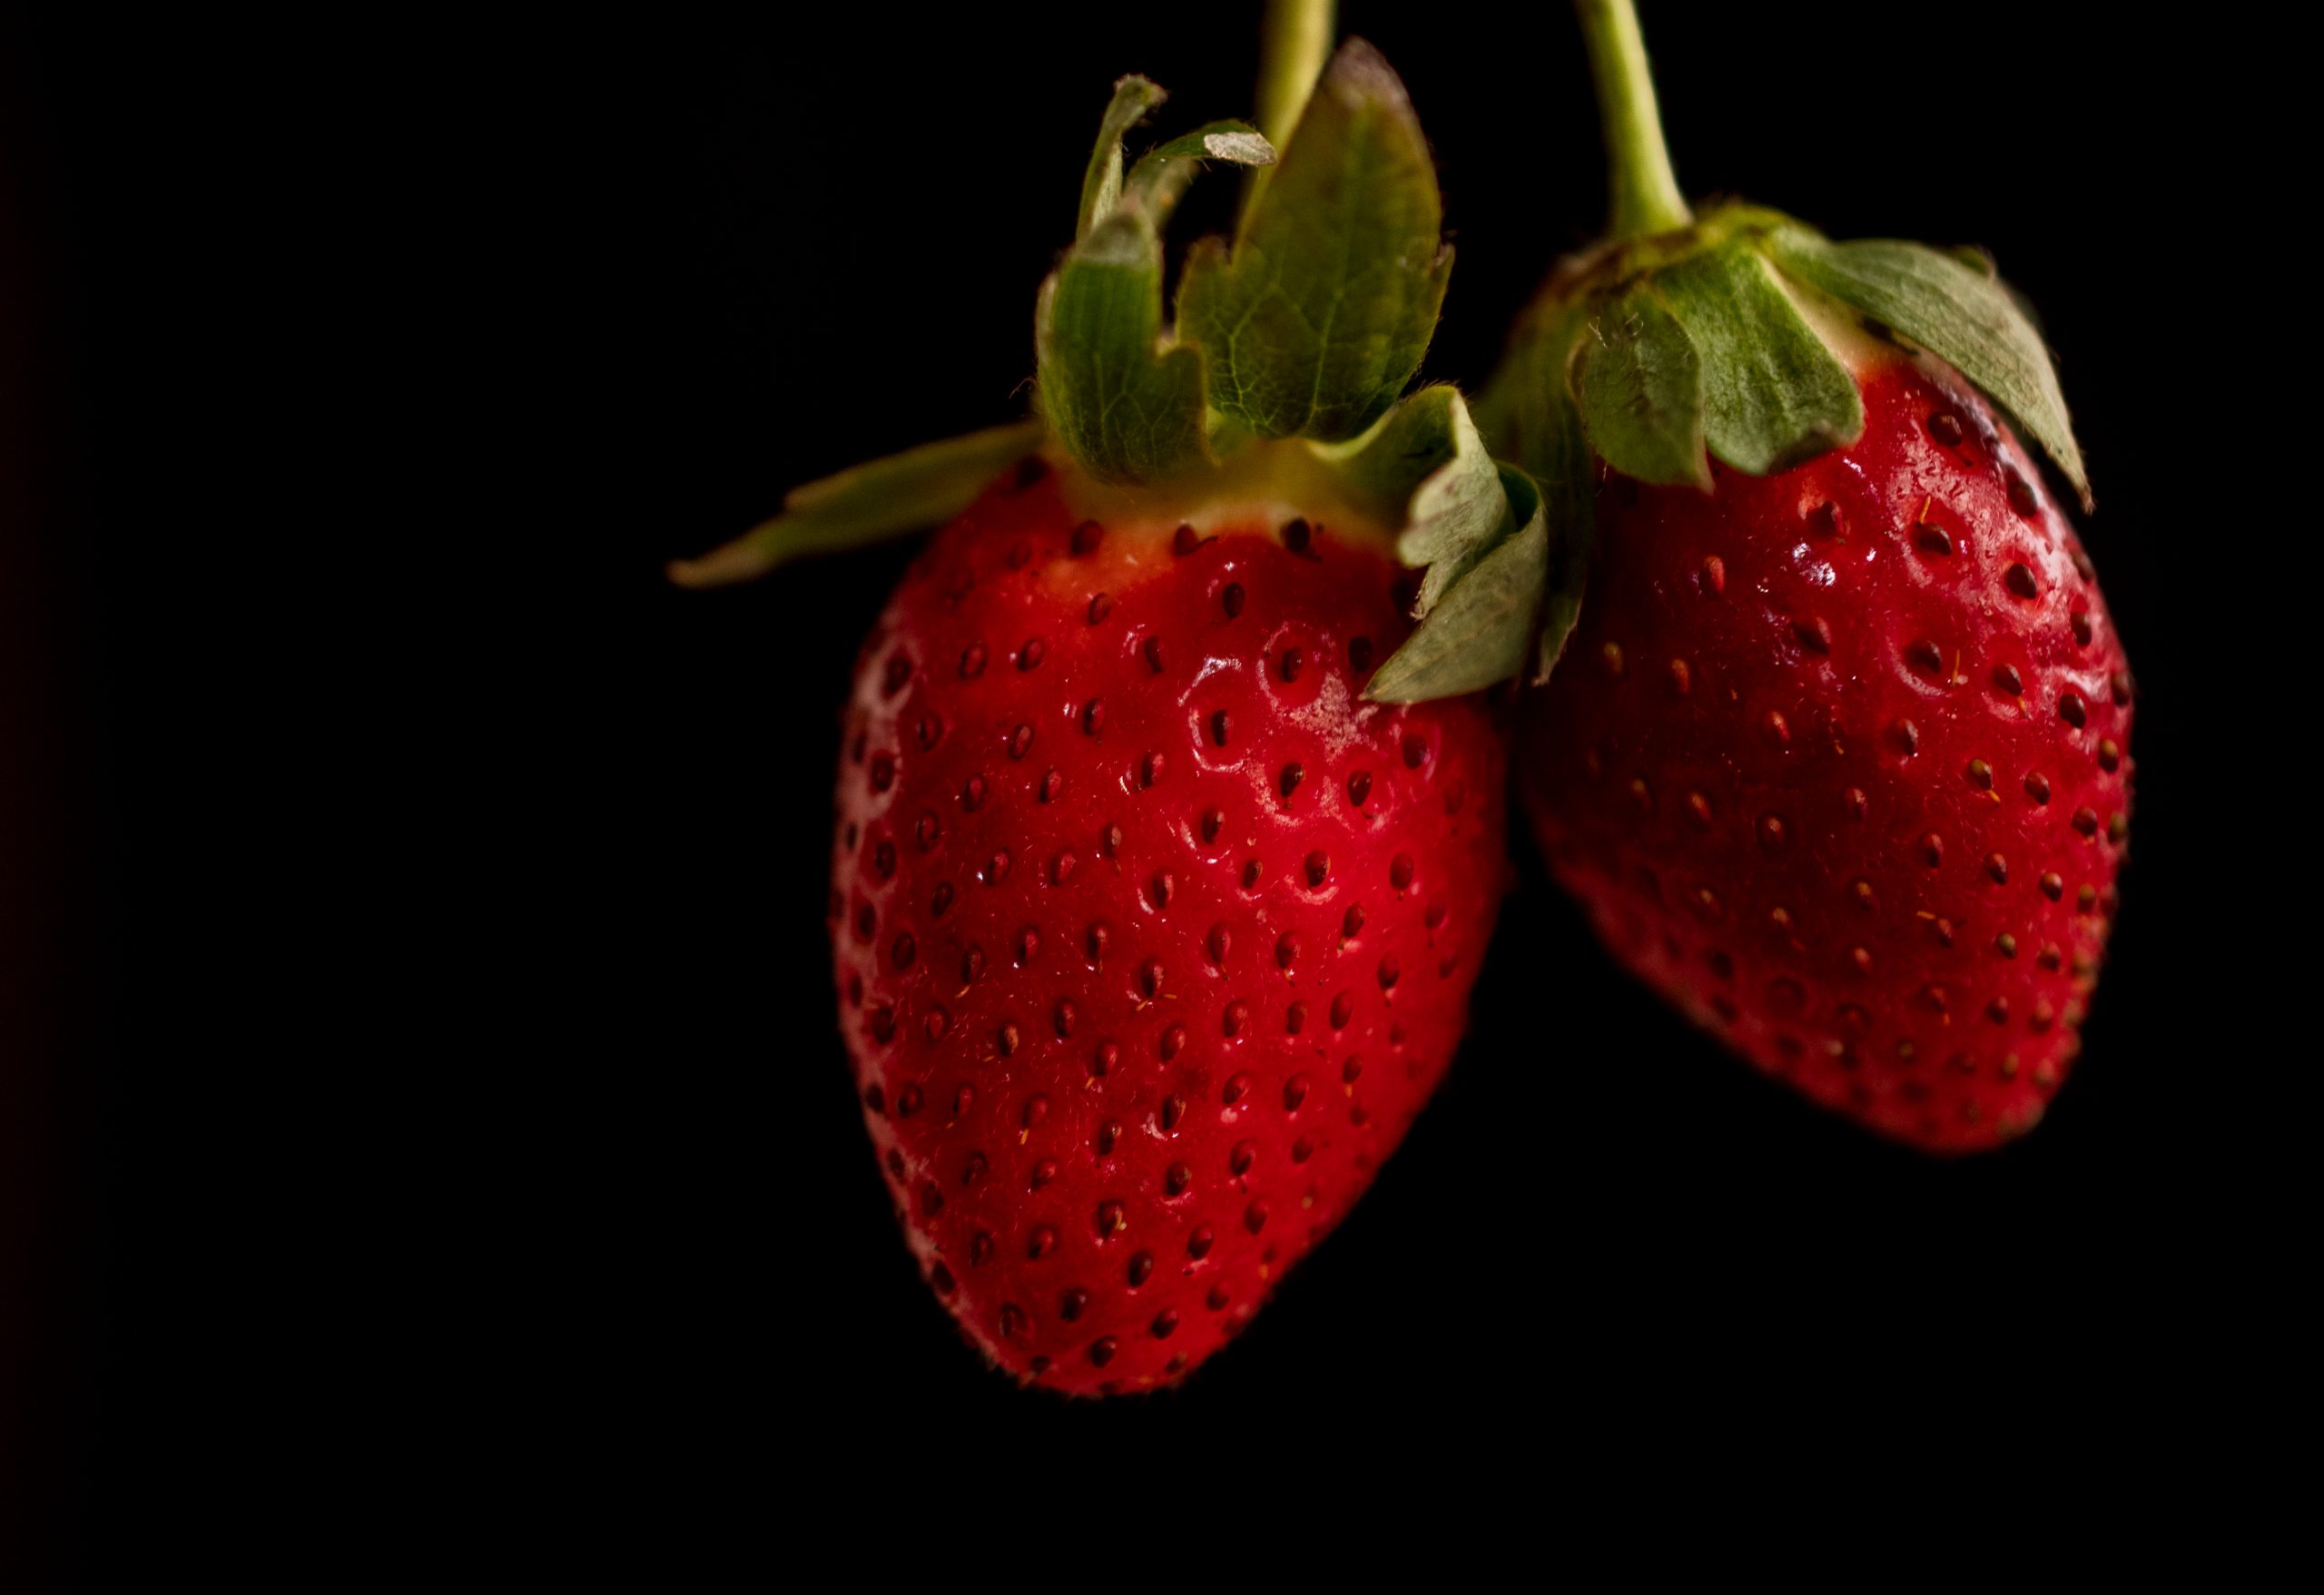 Strawberries in the dark